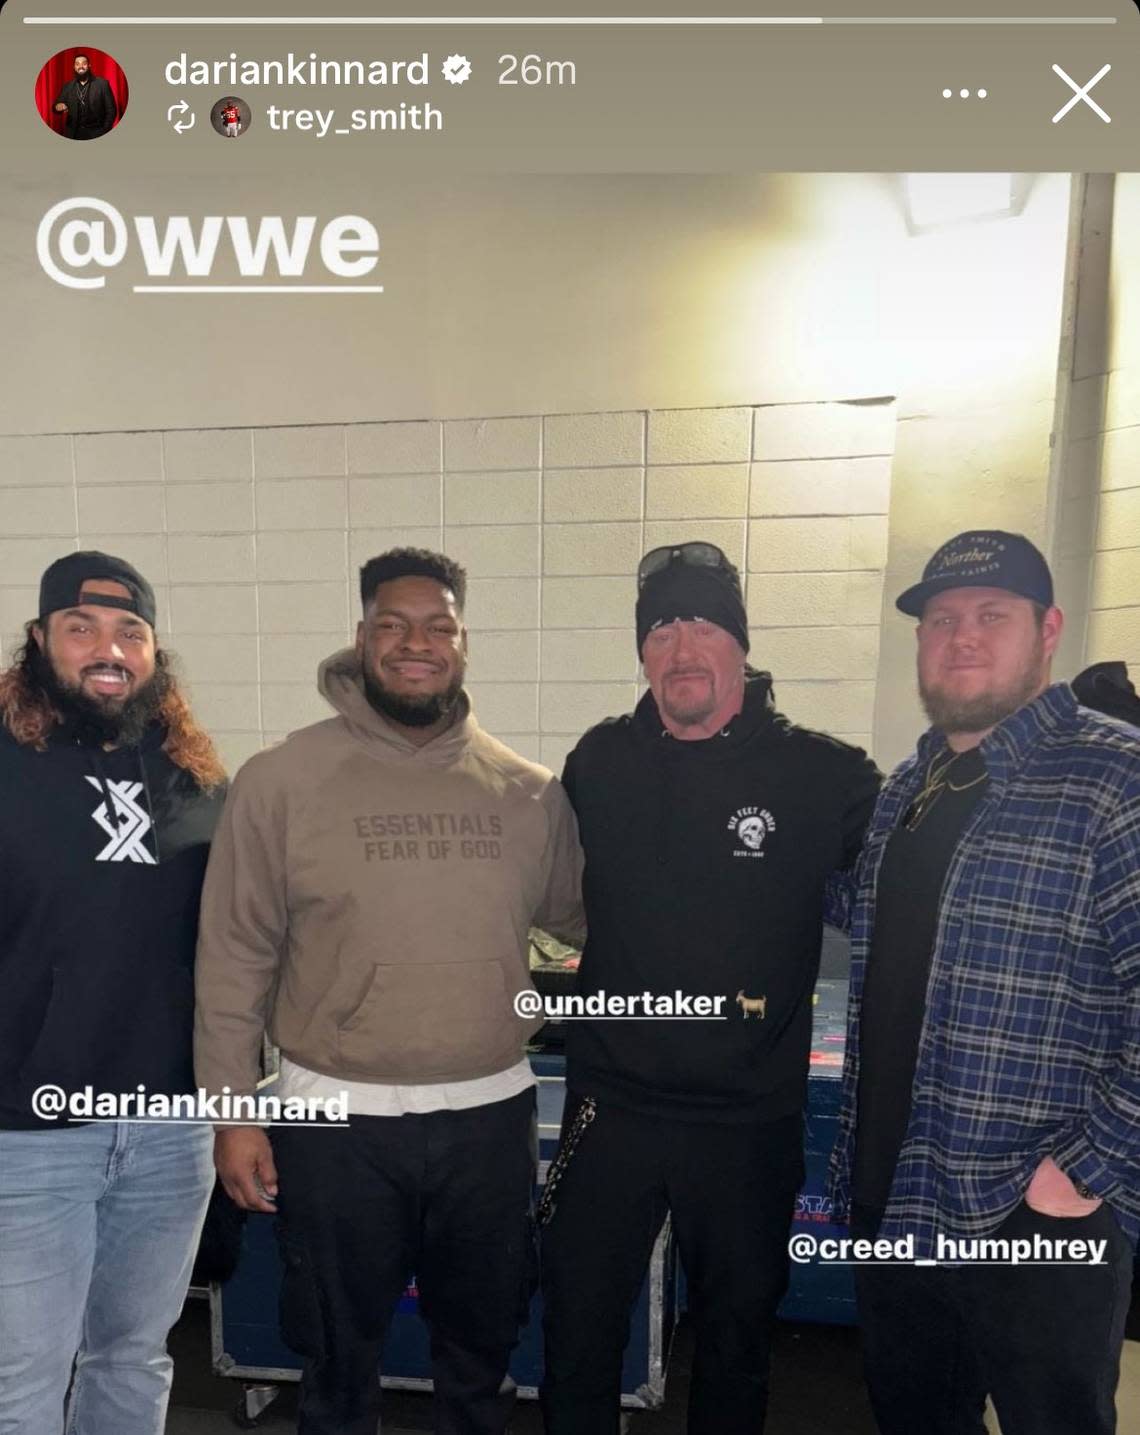 Chiefs offensive linemen Darian Kinnard, Trey Smith and Creed Humphrey met WWE star The Undertaker. Screengrab of Darian Kinnard Instagram story